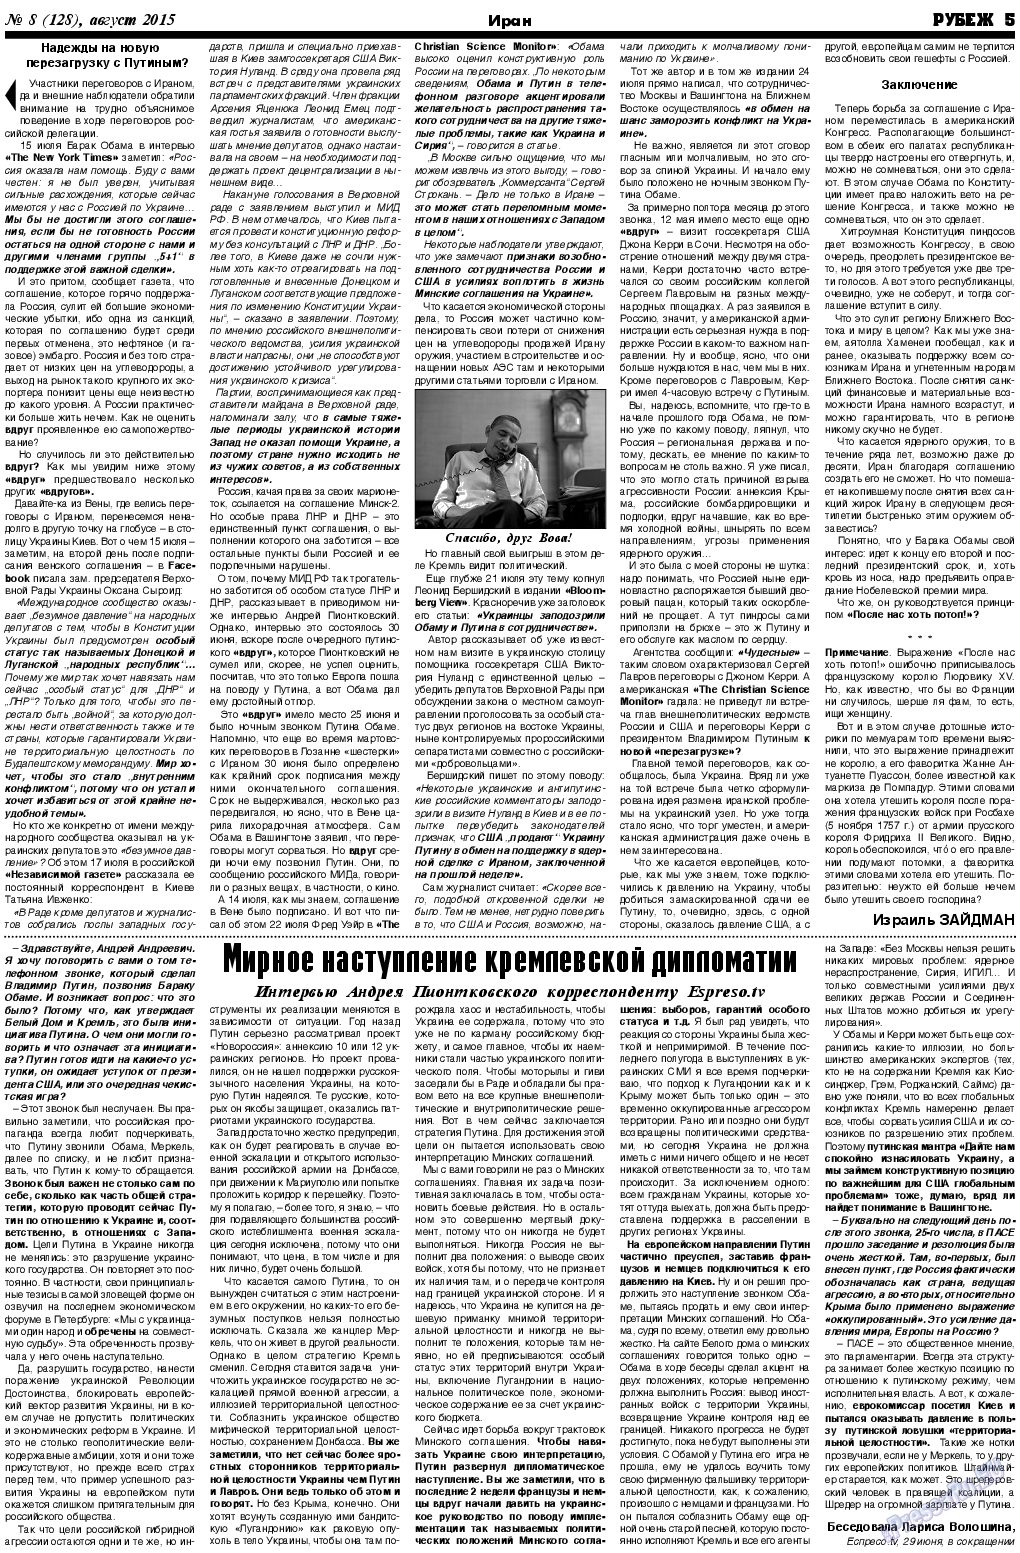 Рубеж, газета. 2015 №8 стр.5